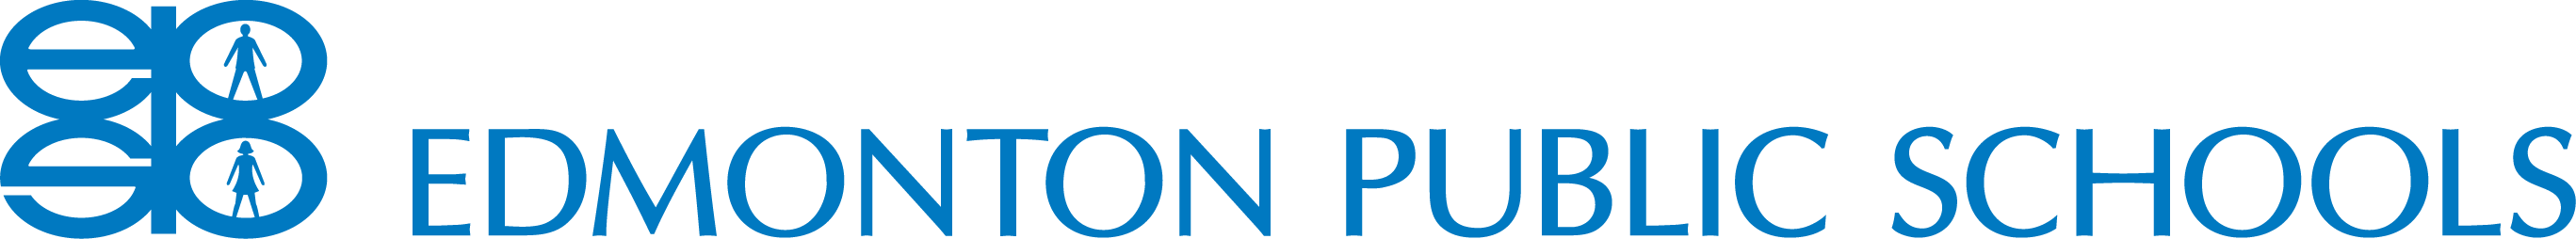 epsb logo- colour